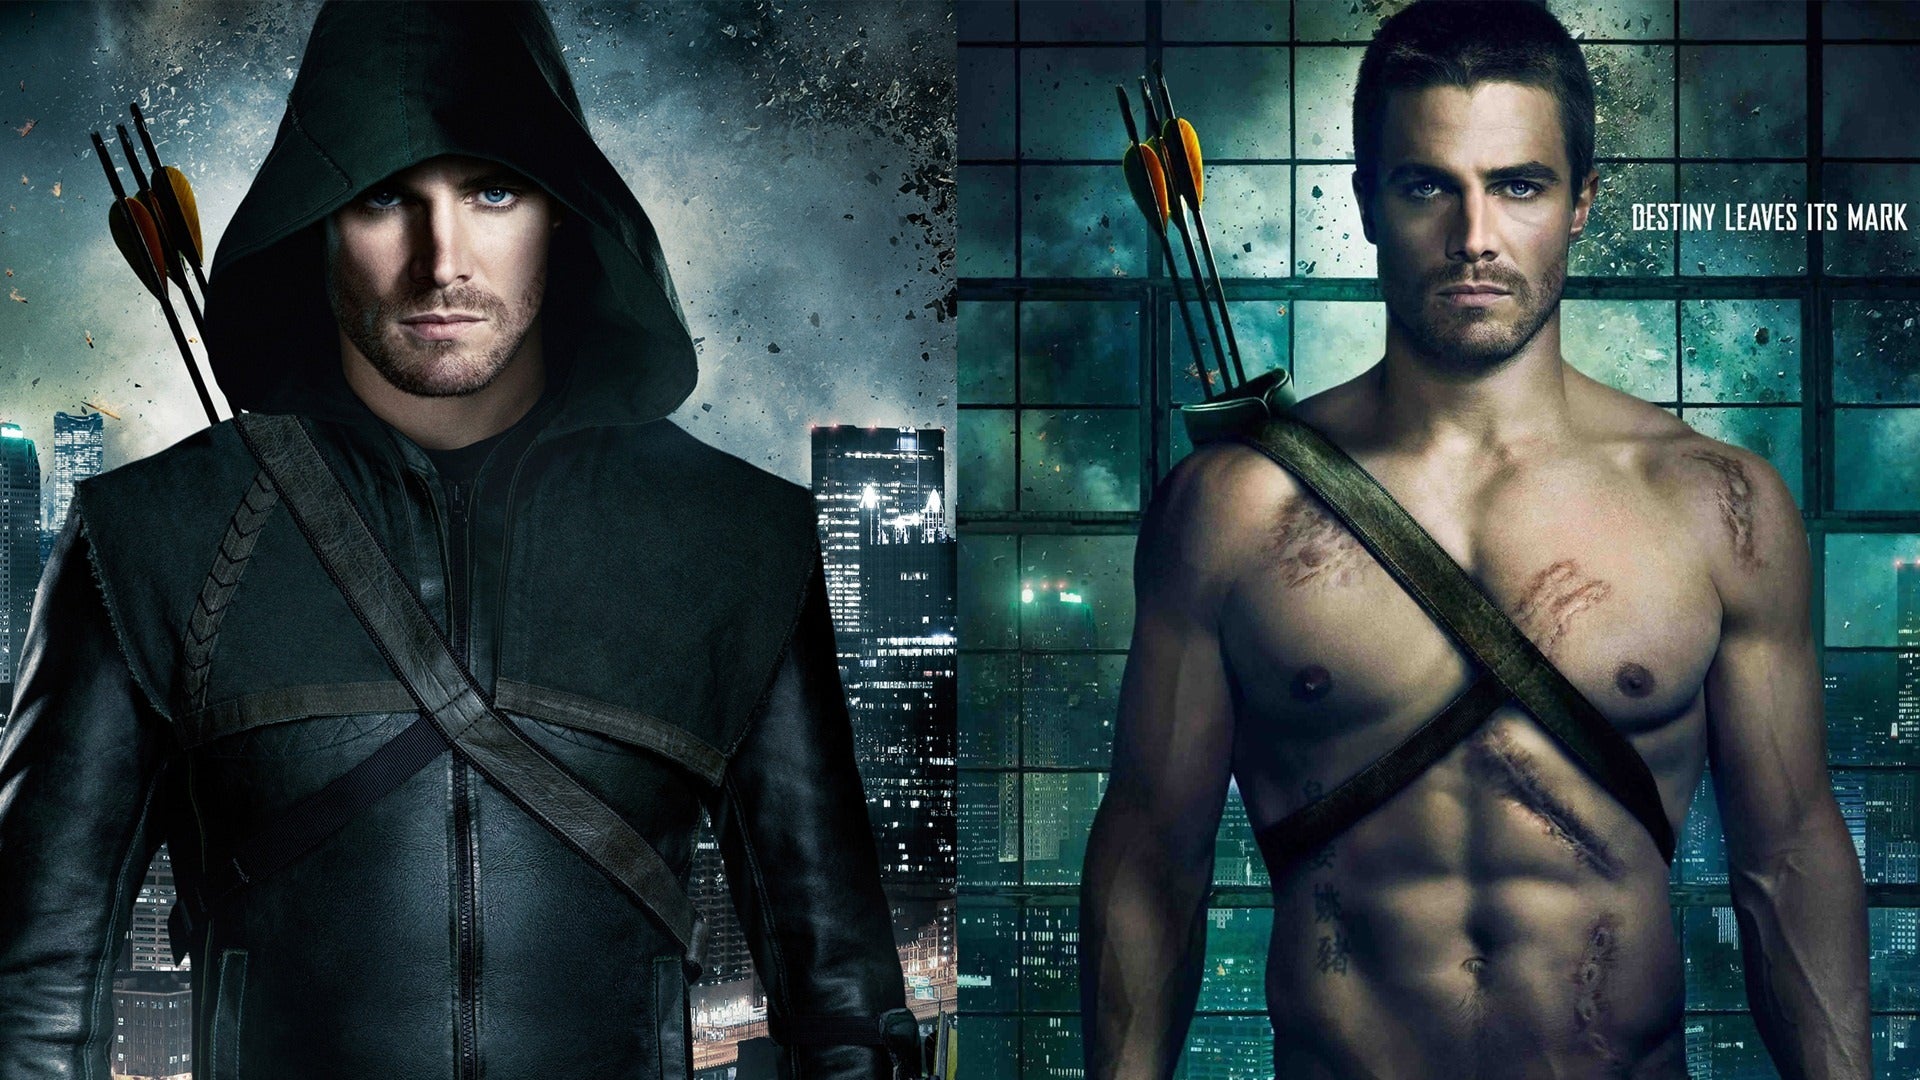 Arrow: Seasons 1 - 6